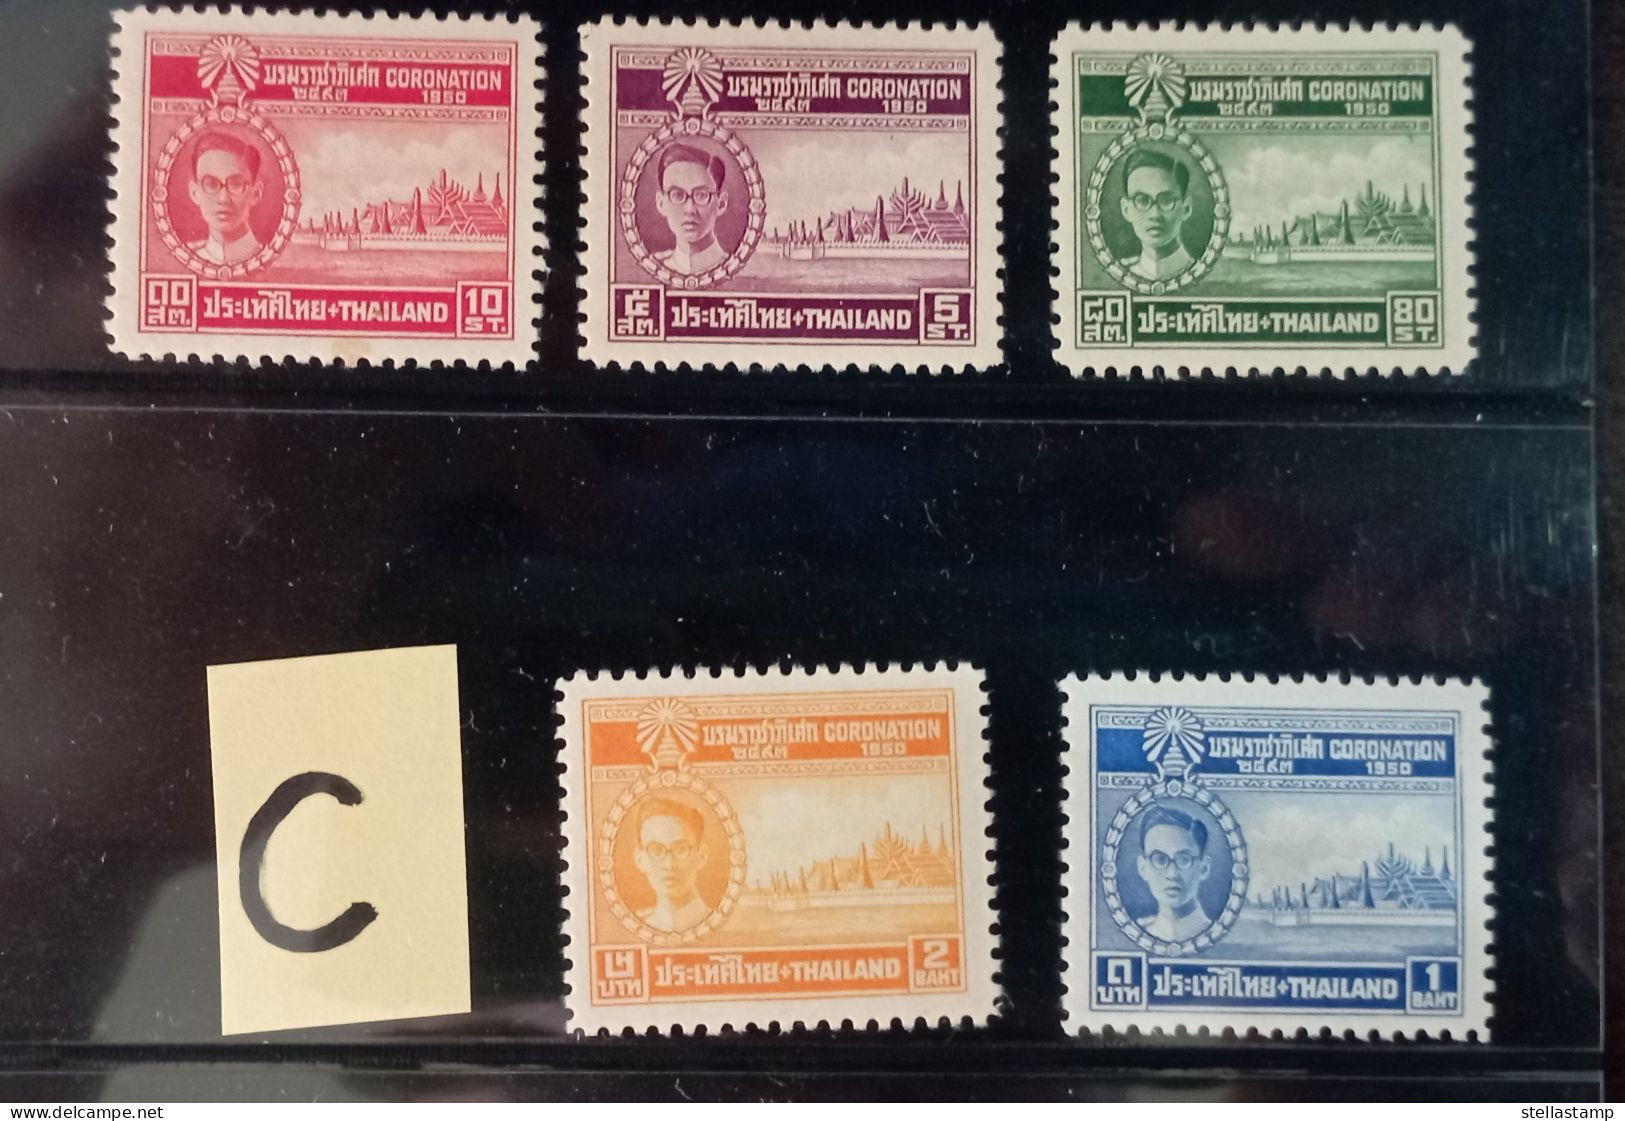 Thailand Stamp 1950 Coronation VF MNH #C - Thailand